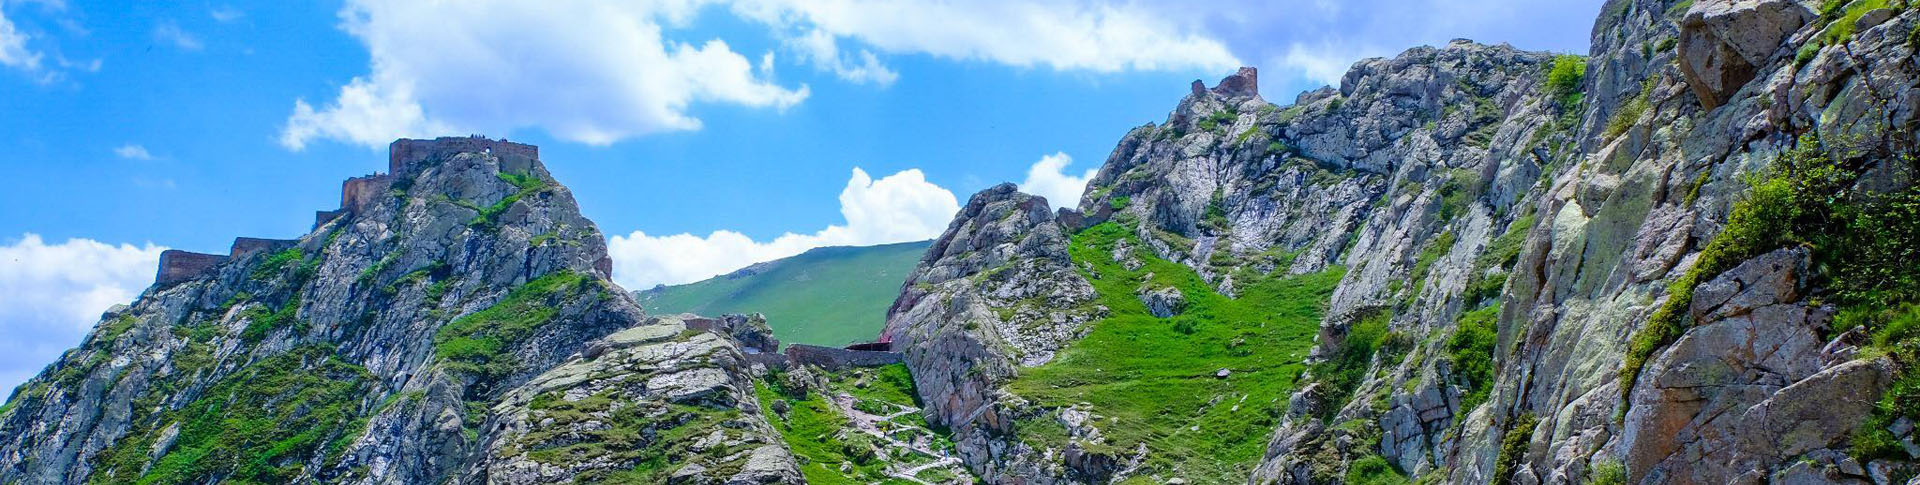 Babak Fort-Kaleybar County-East Azerbaijan Province